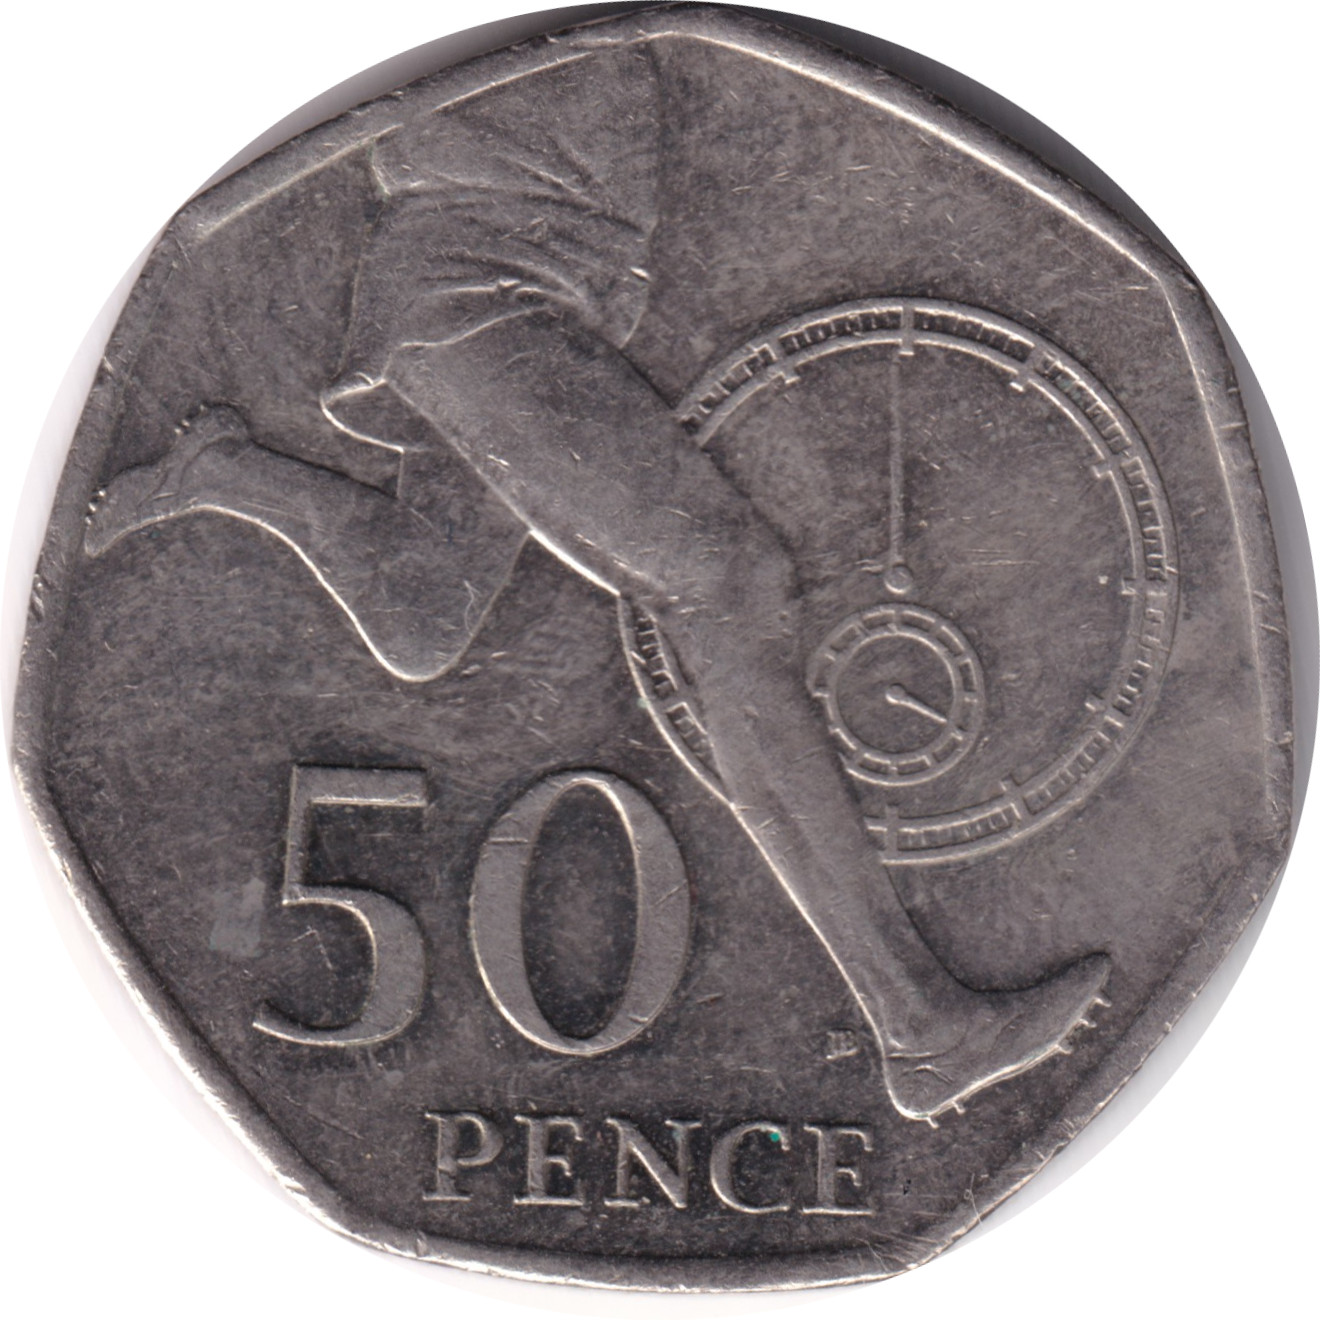 50 pence - Roger Bannister